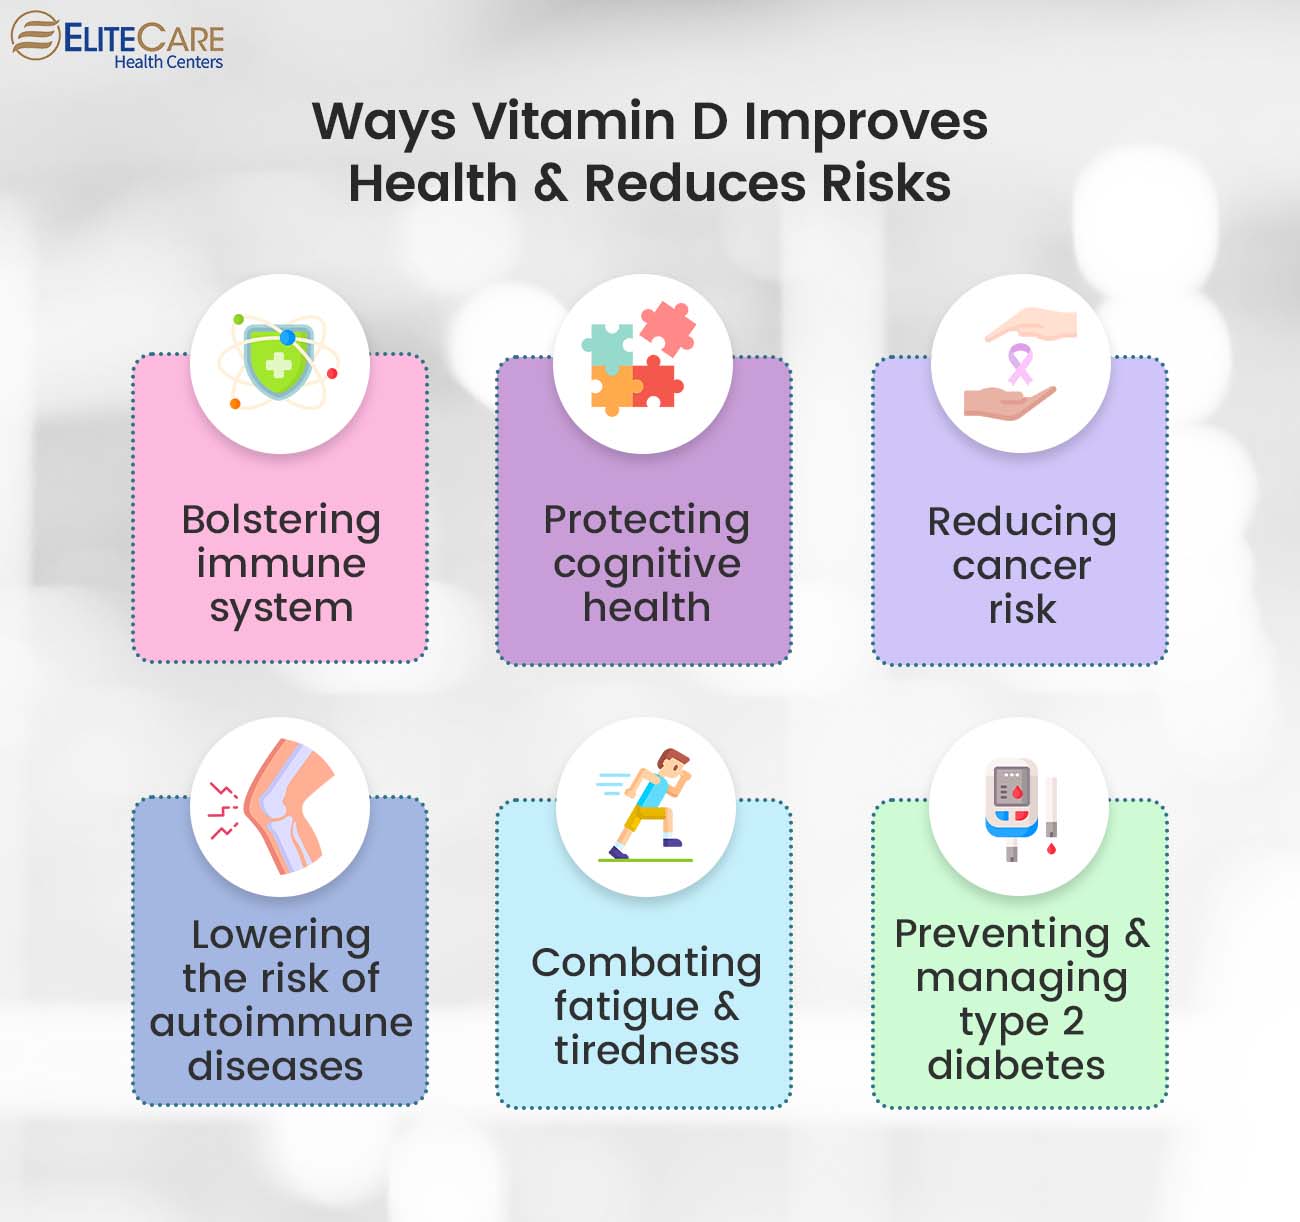 Ways Vitamin D Improves Health & Reduces Risks